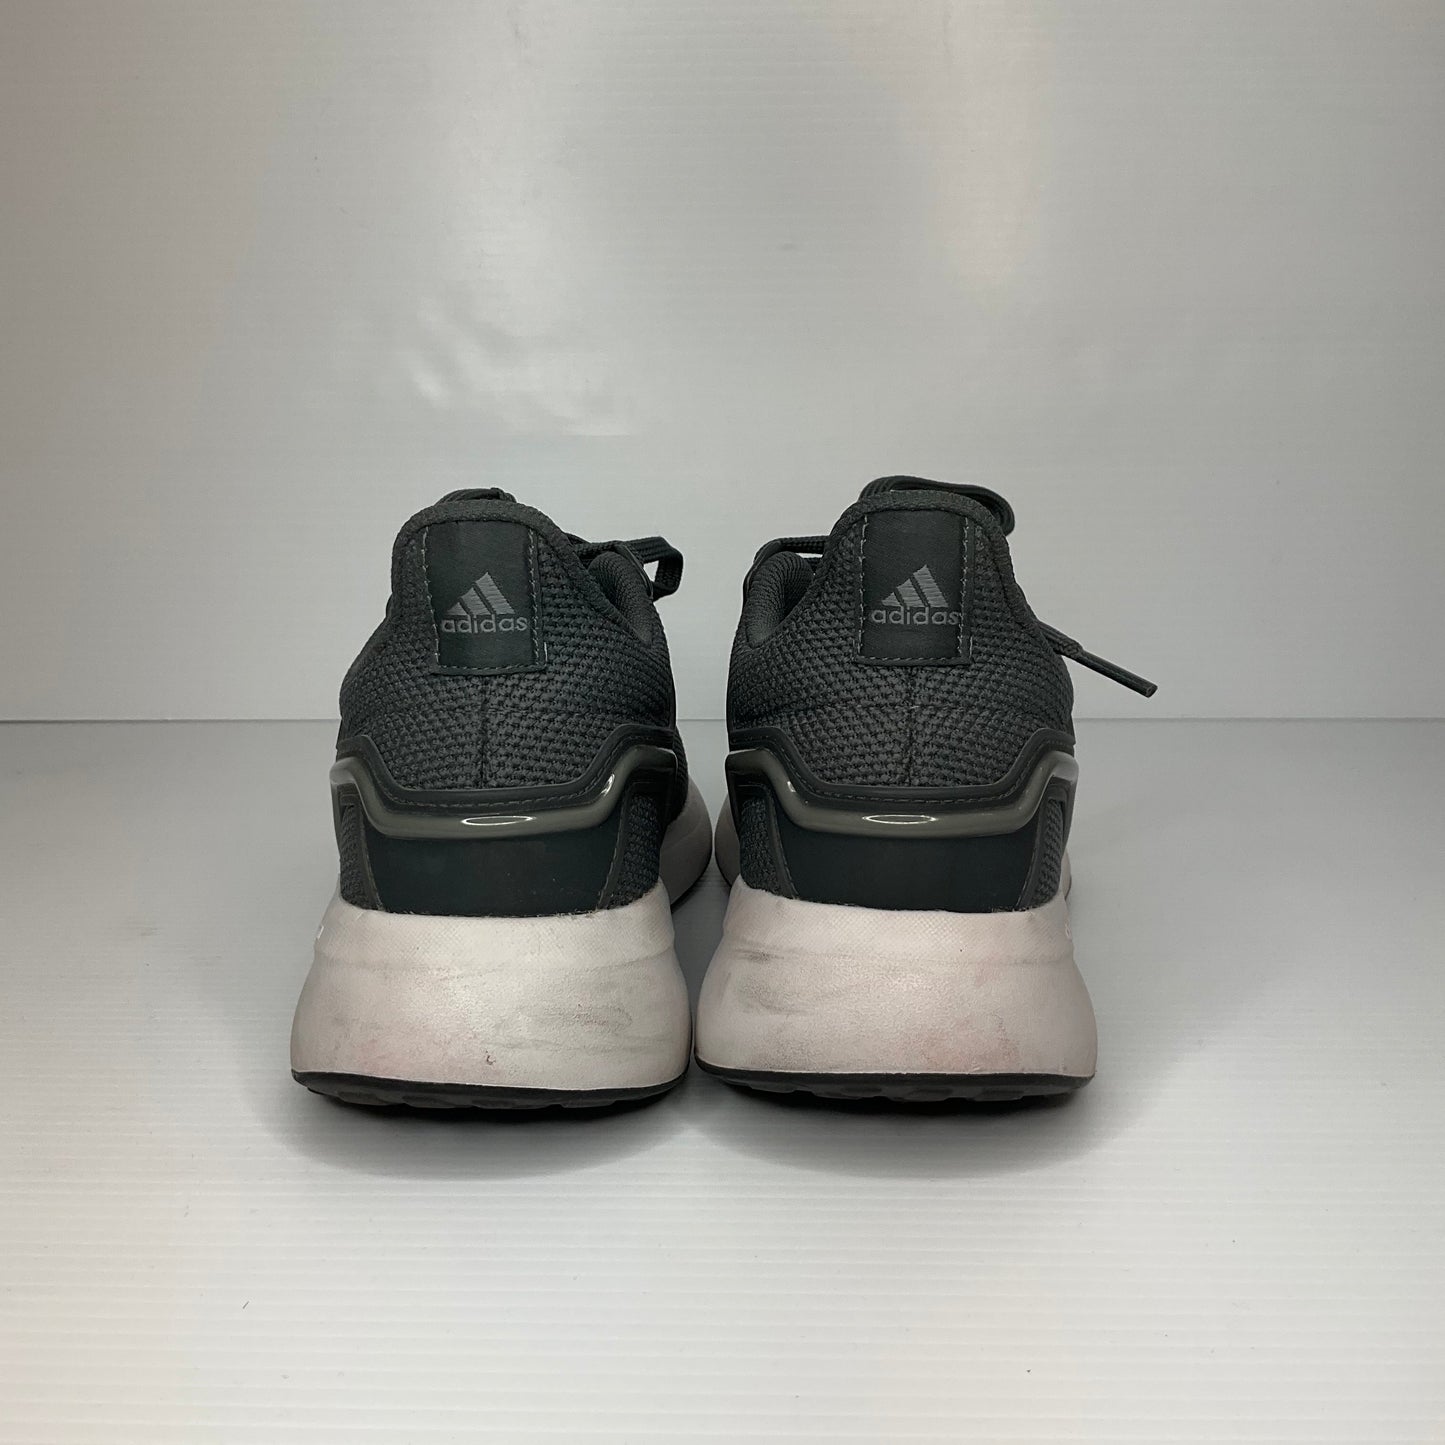 Grey Shoes Athletic Adidas, Size 5.5